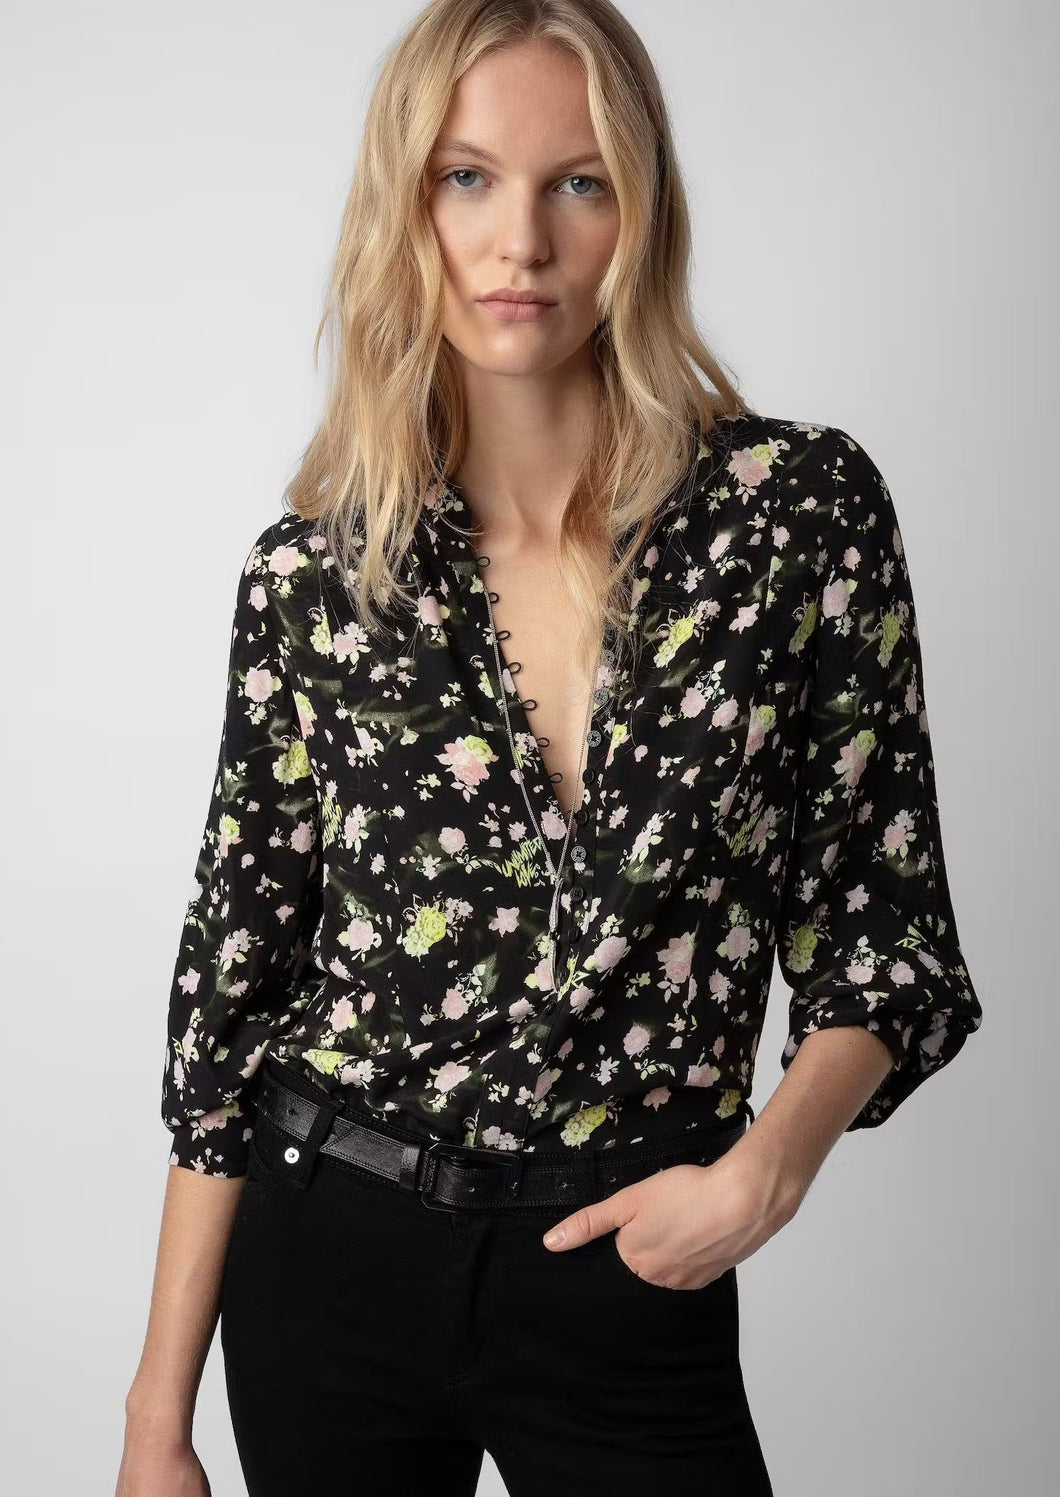 zadig & voltaire floral print blouse at west2westport.com